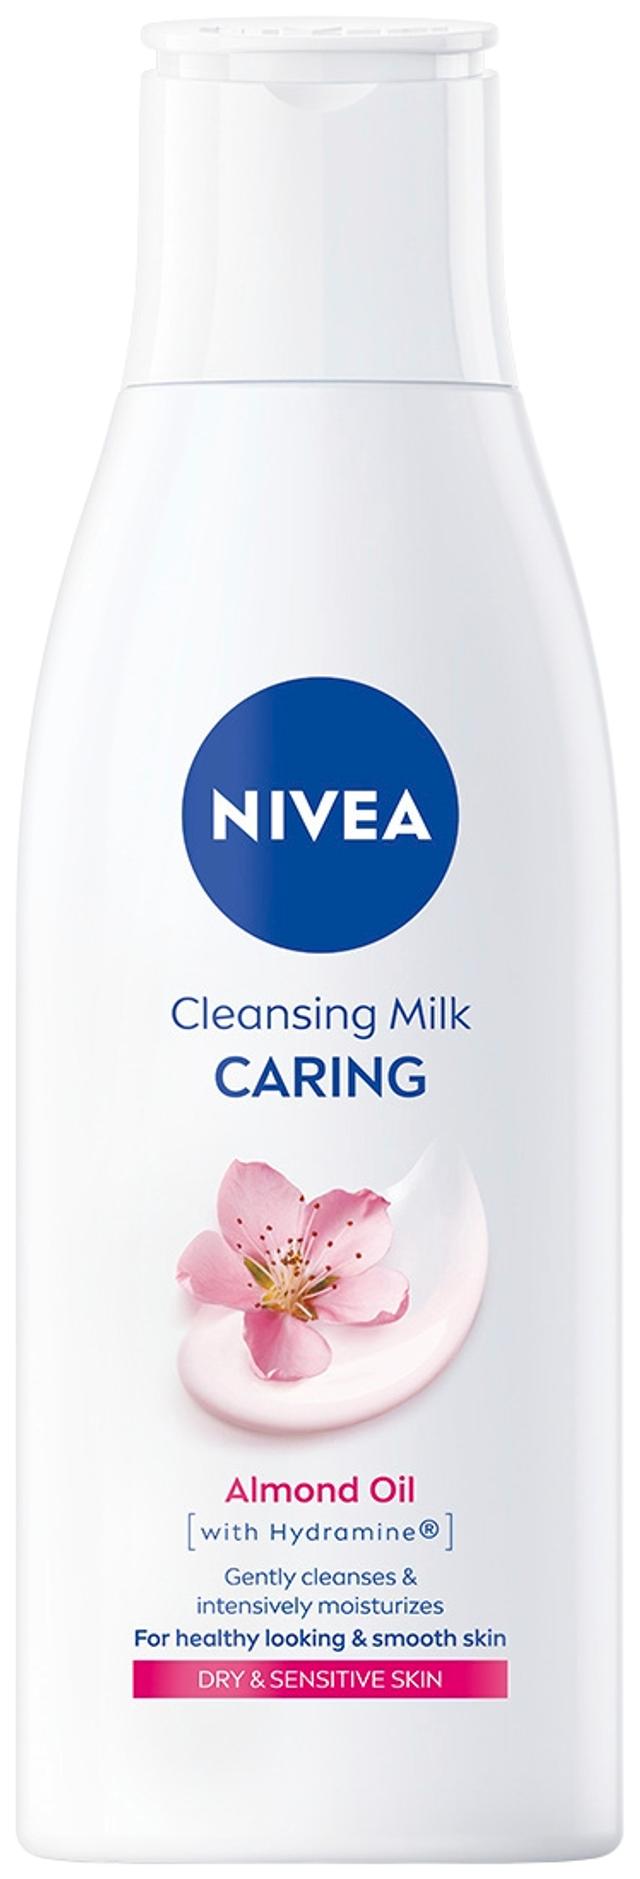 NIVEA 200ml Daily Essentials Indulging Cleansing Milk puhdistusemulsio kuivalle iholle